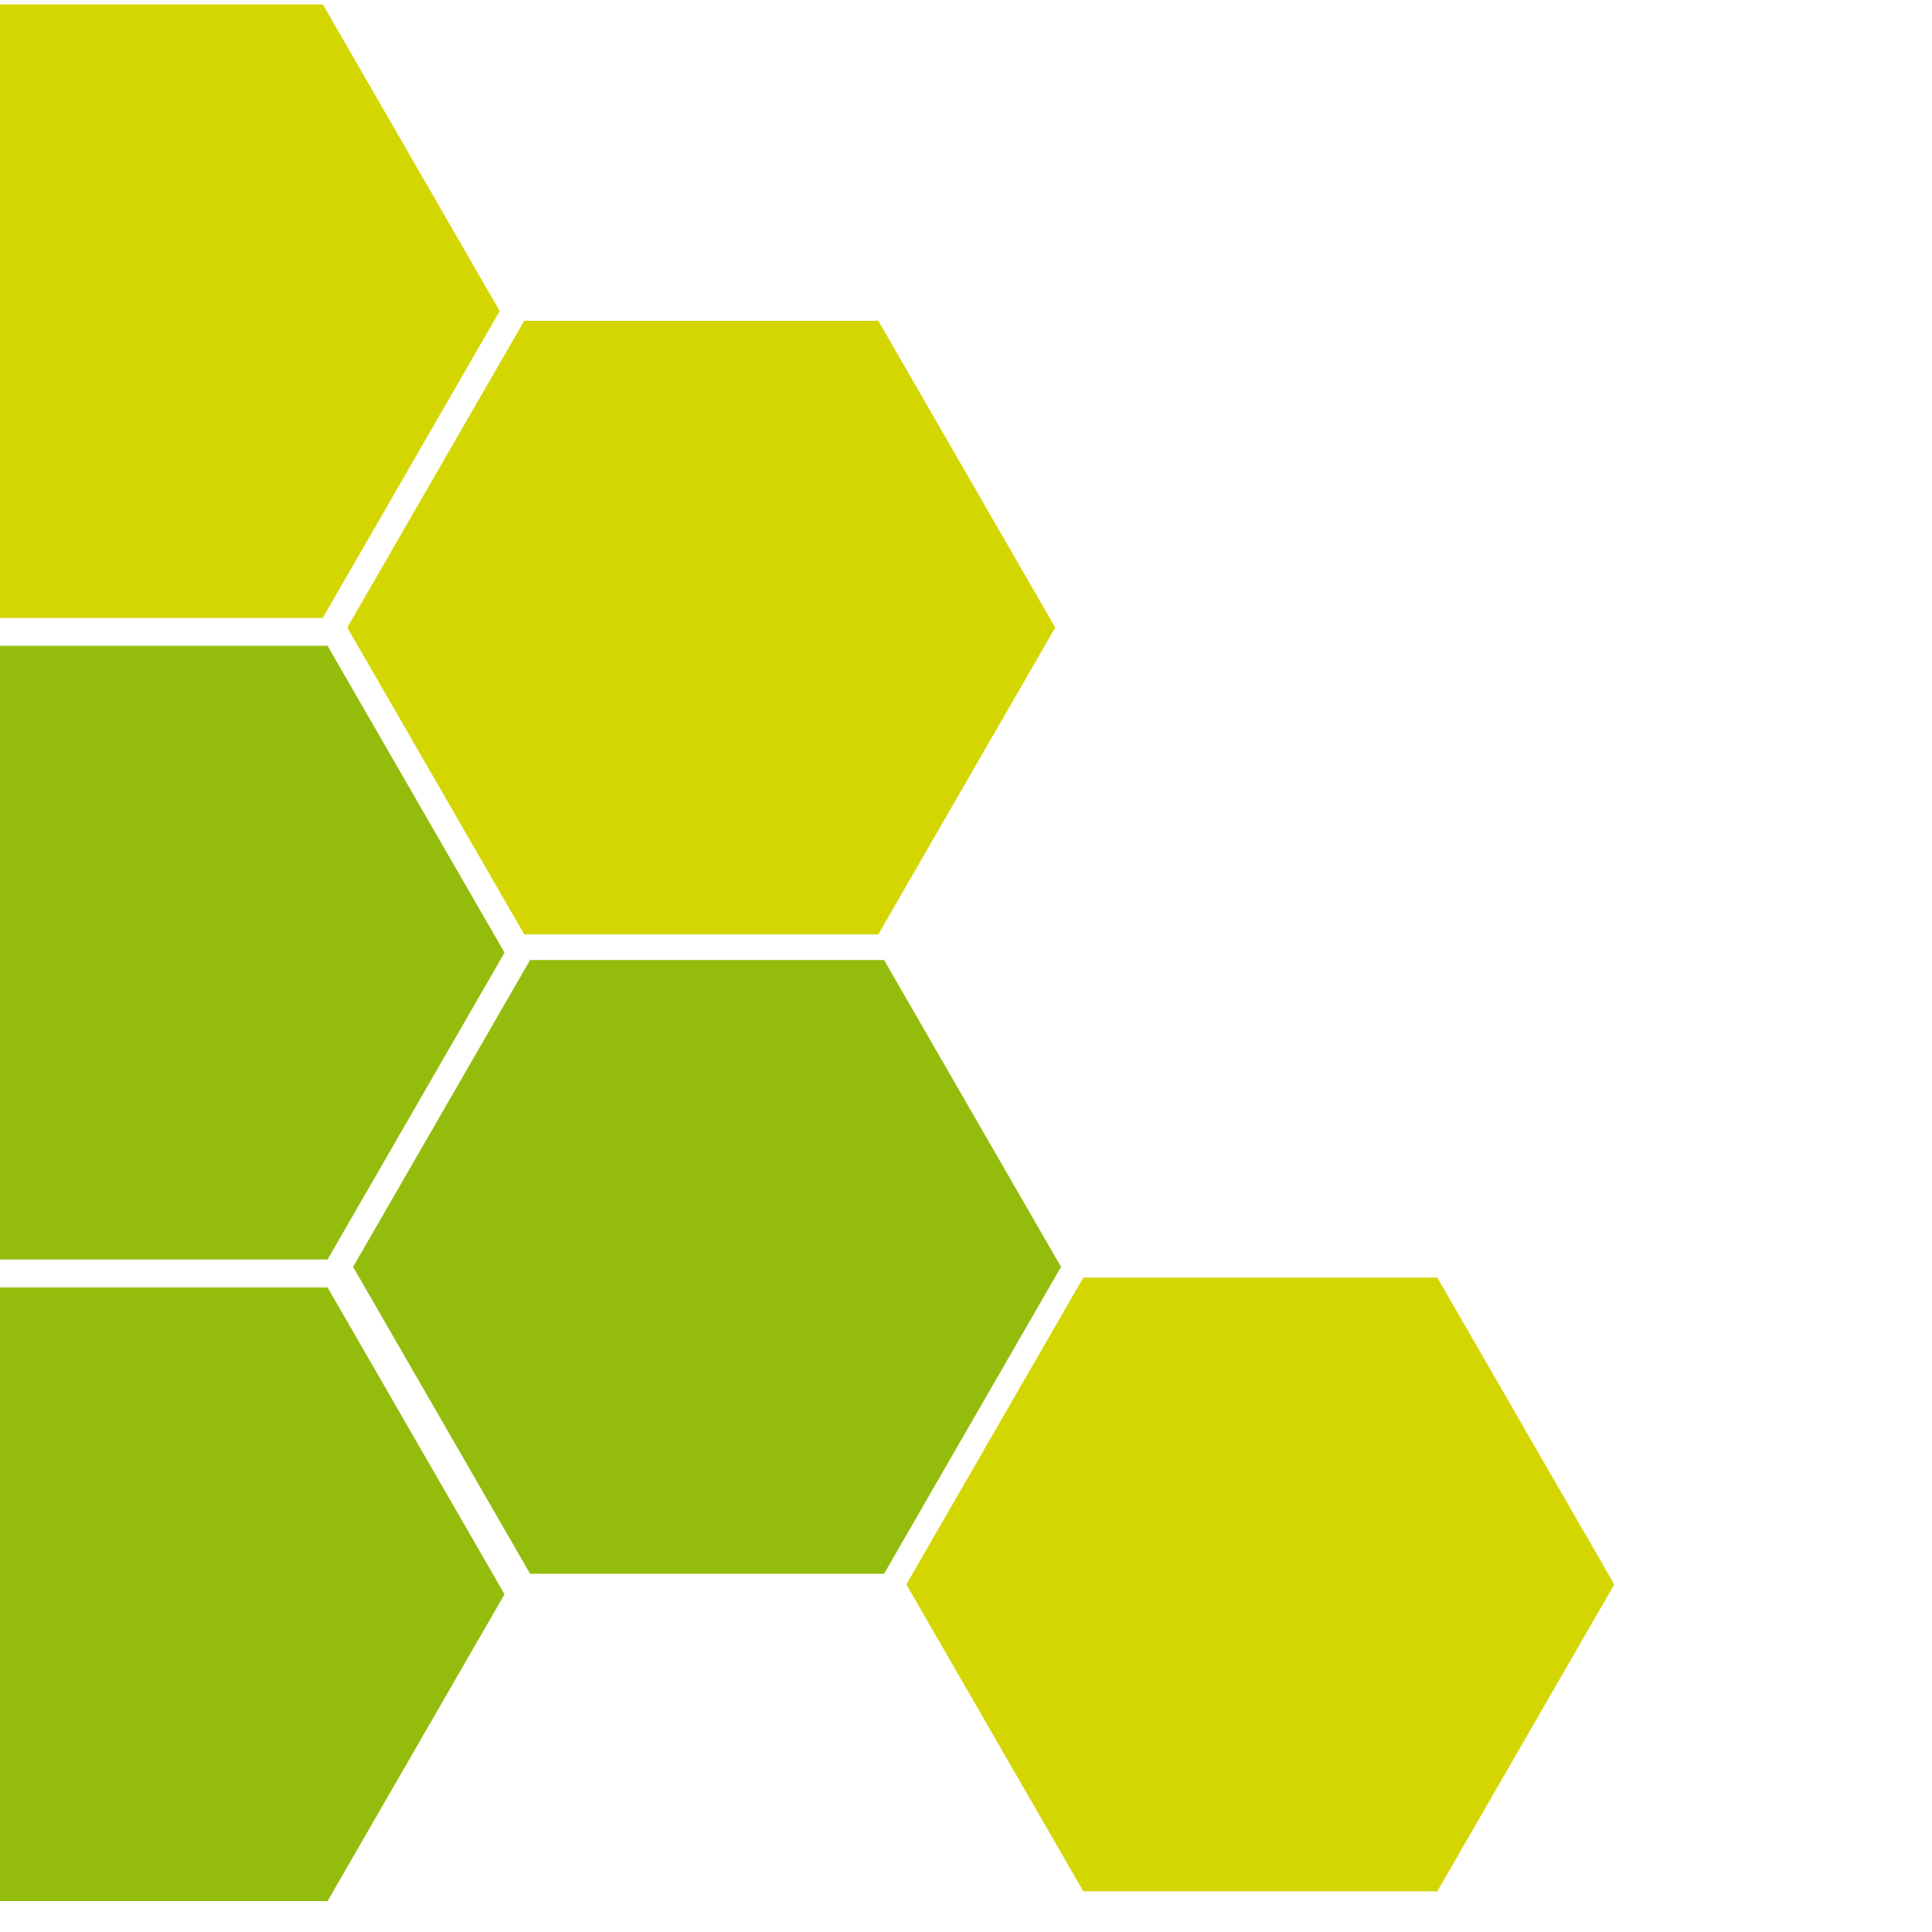 green hex pattern